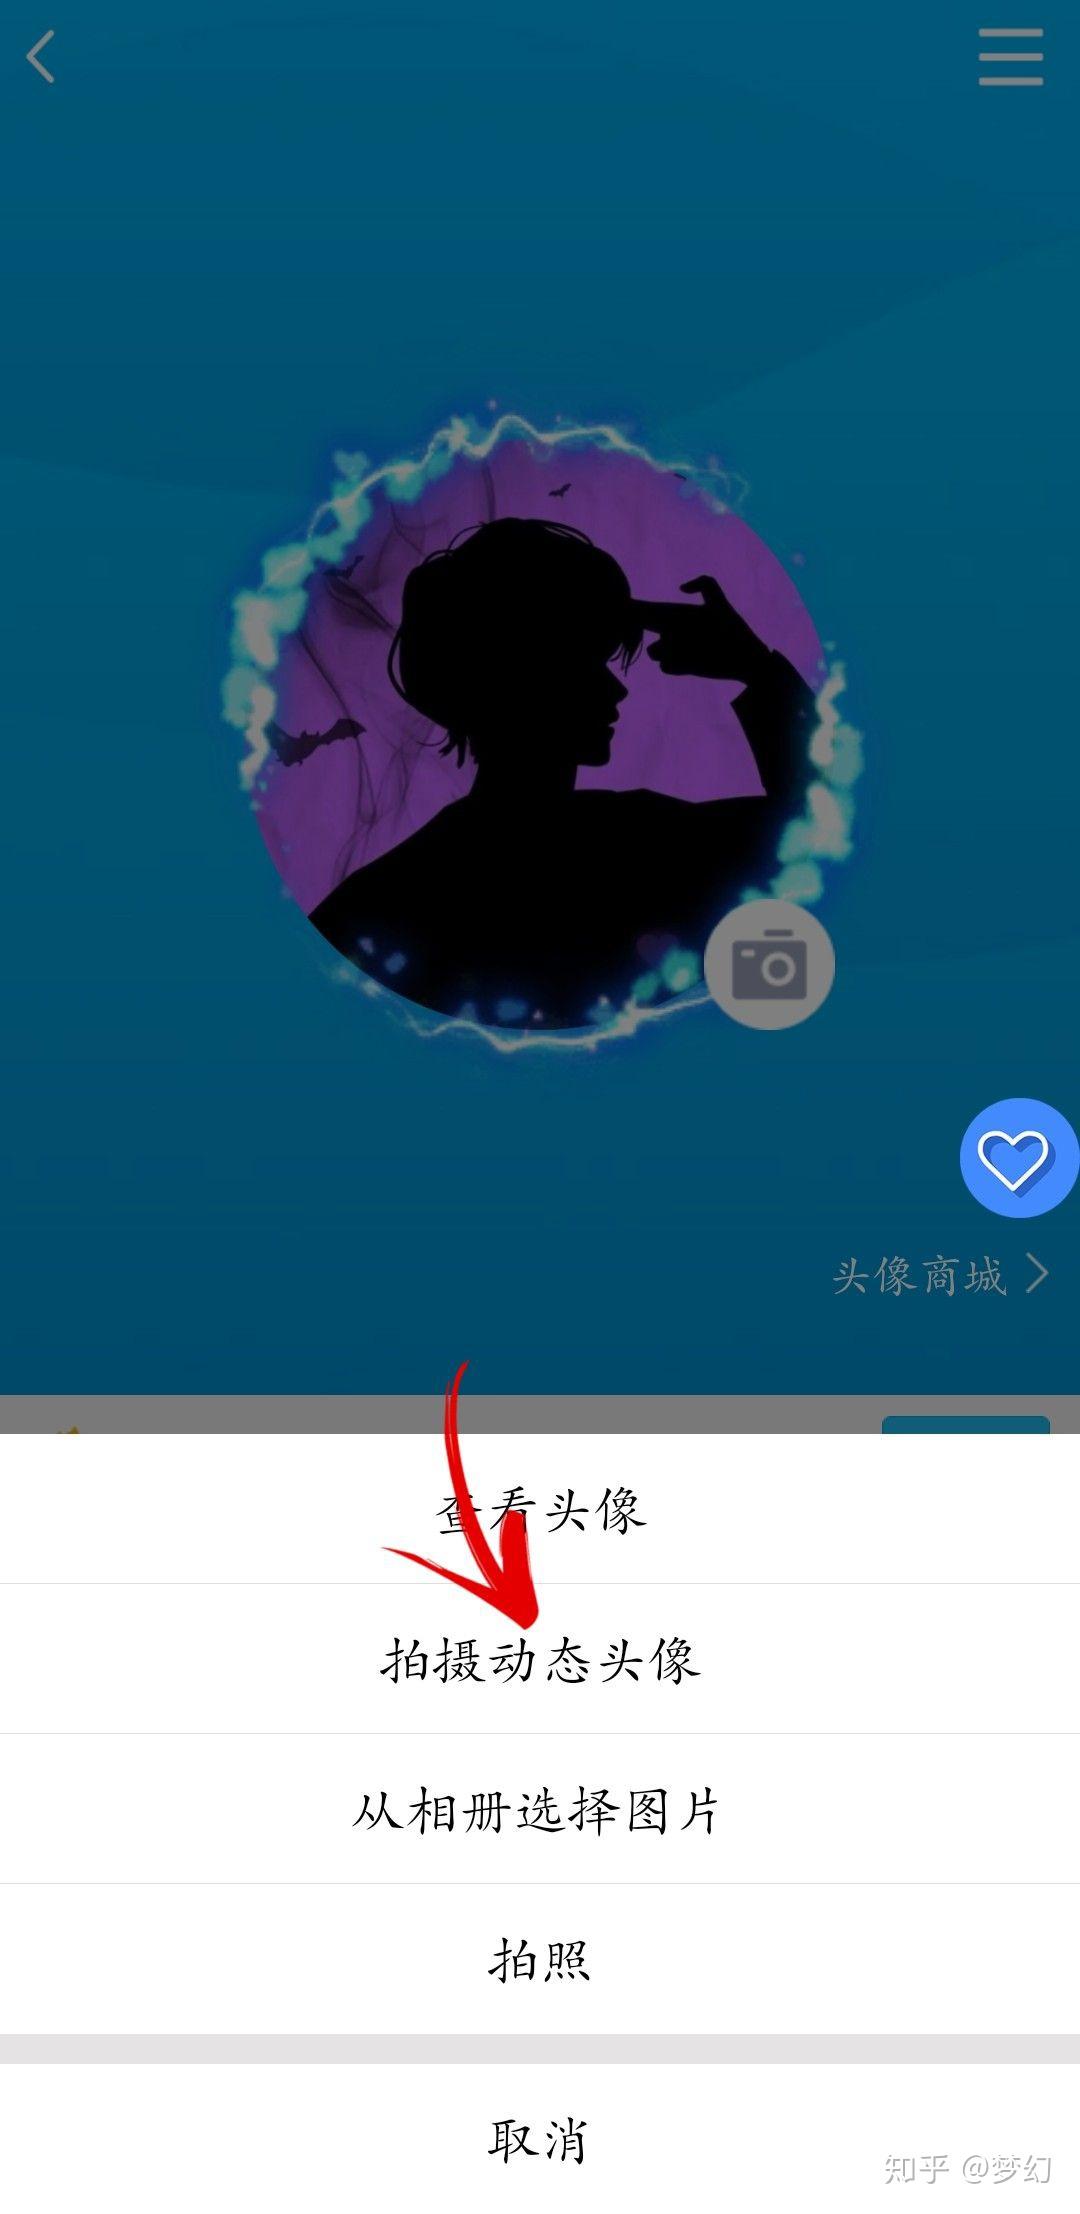 QQ动态头像设置（for Android）-腾讯云开发者社区-腾讯云